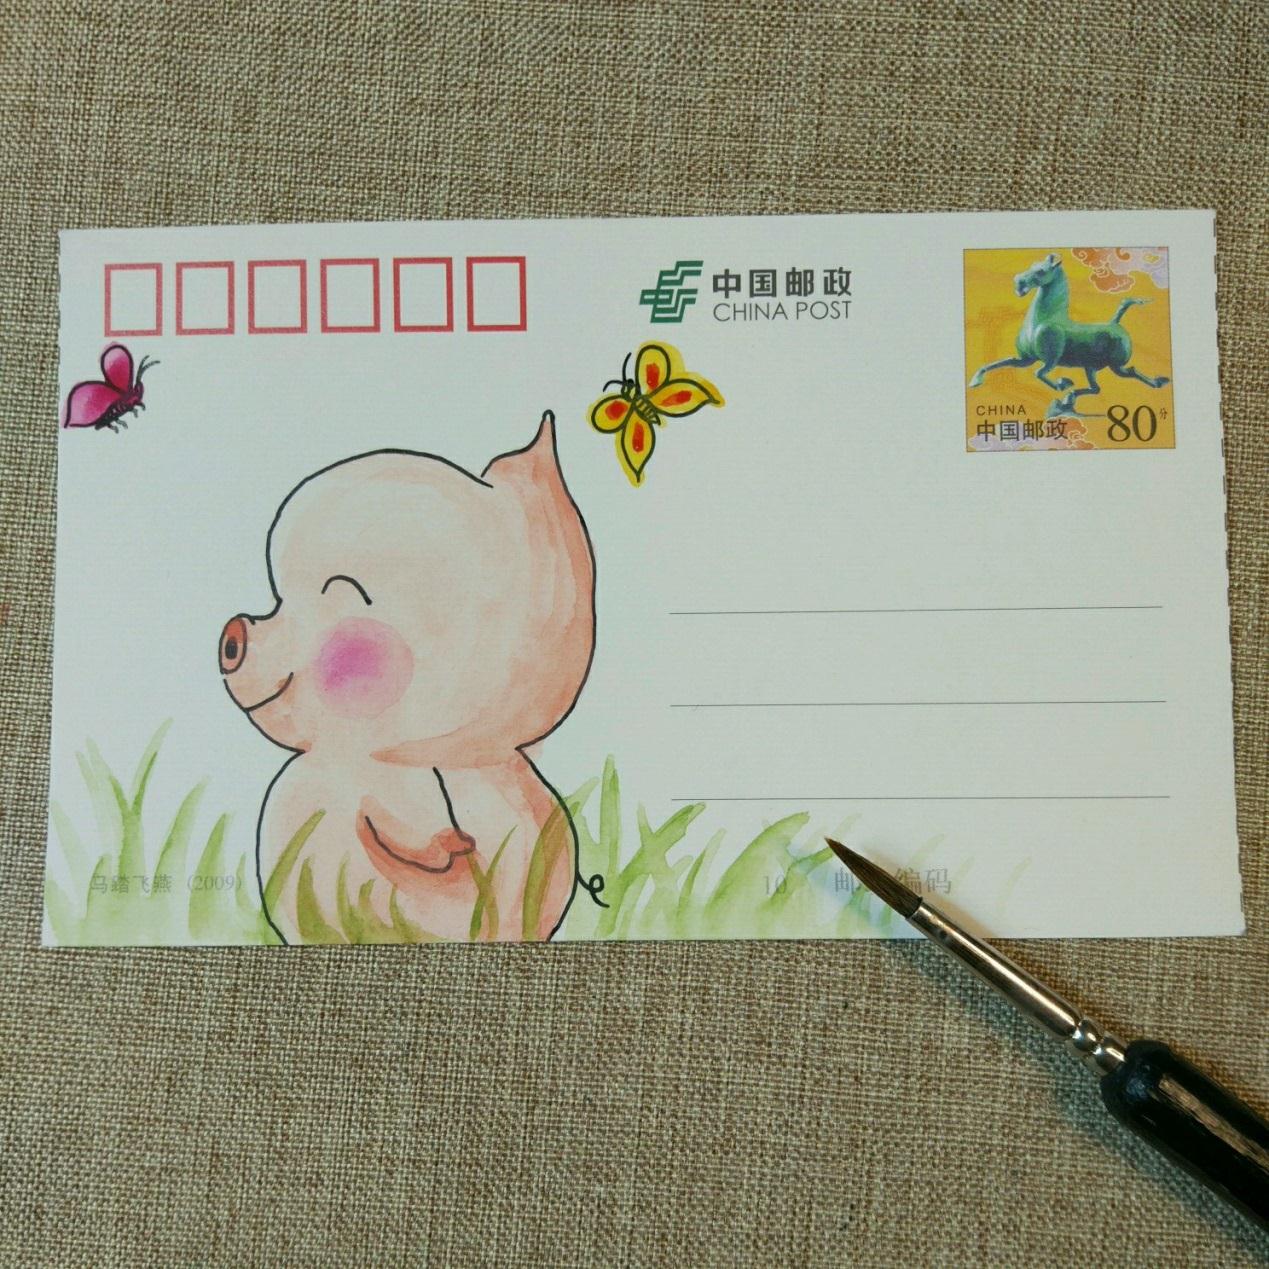 DIY小动物手绘明信片 教你绘制可爱的小猪漫画